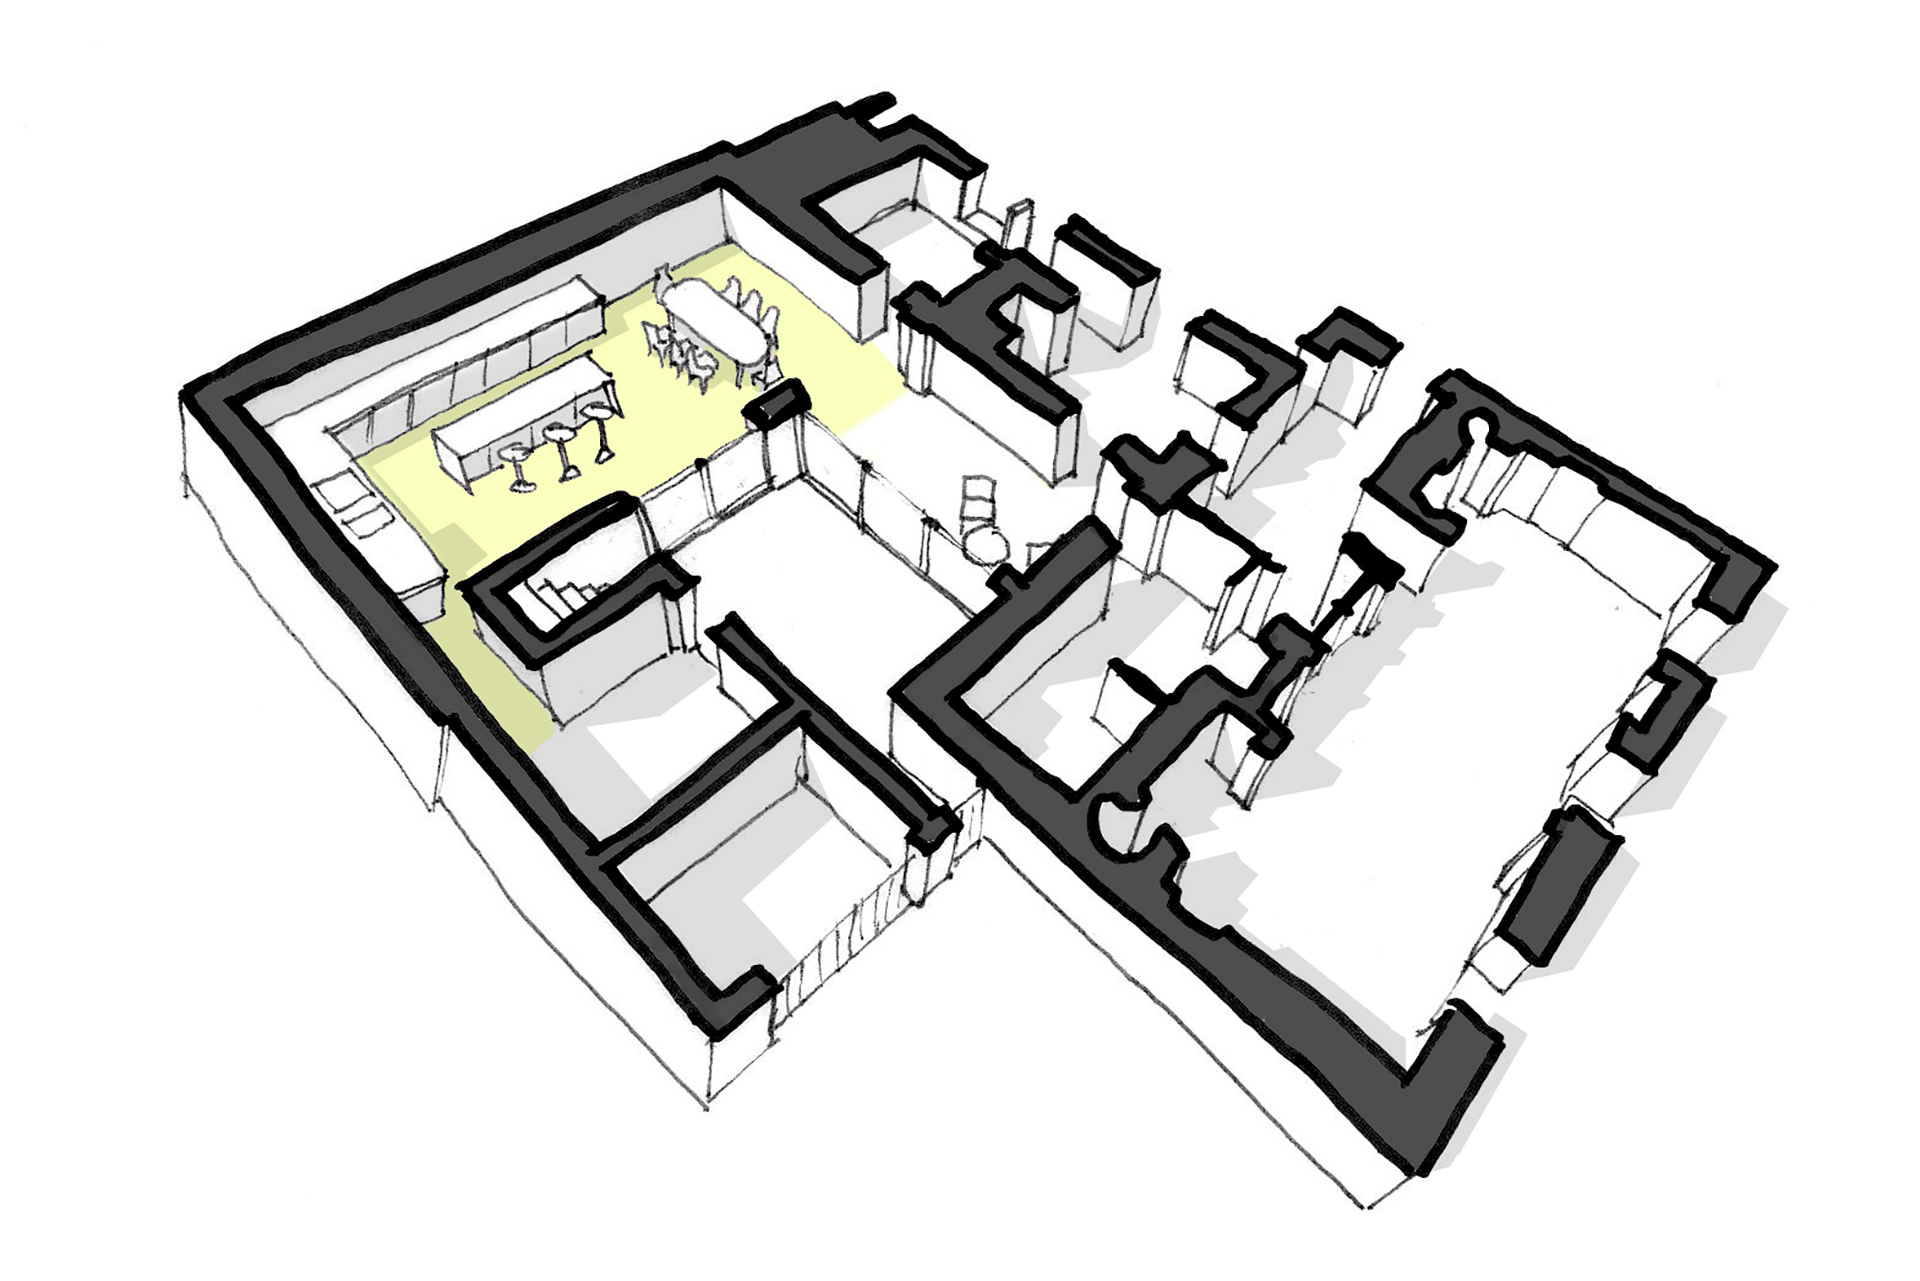 visual sketch of ground floor plan of house